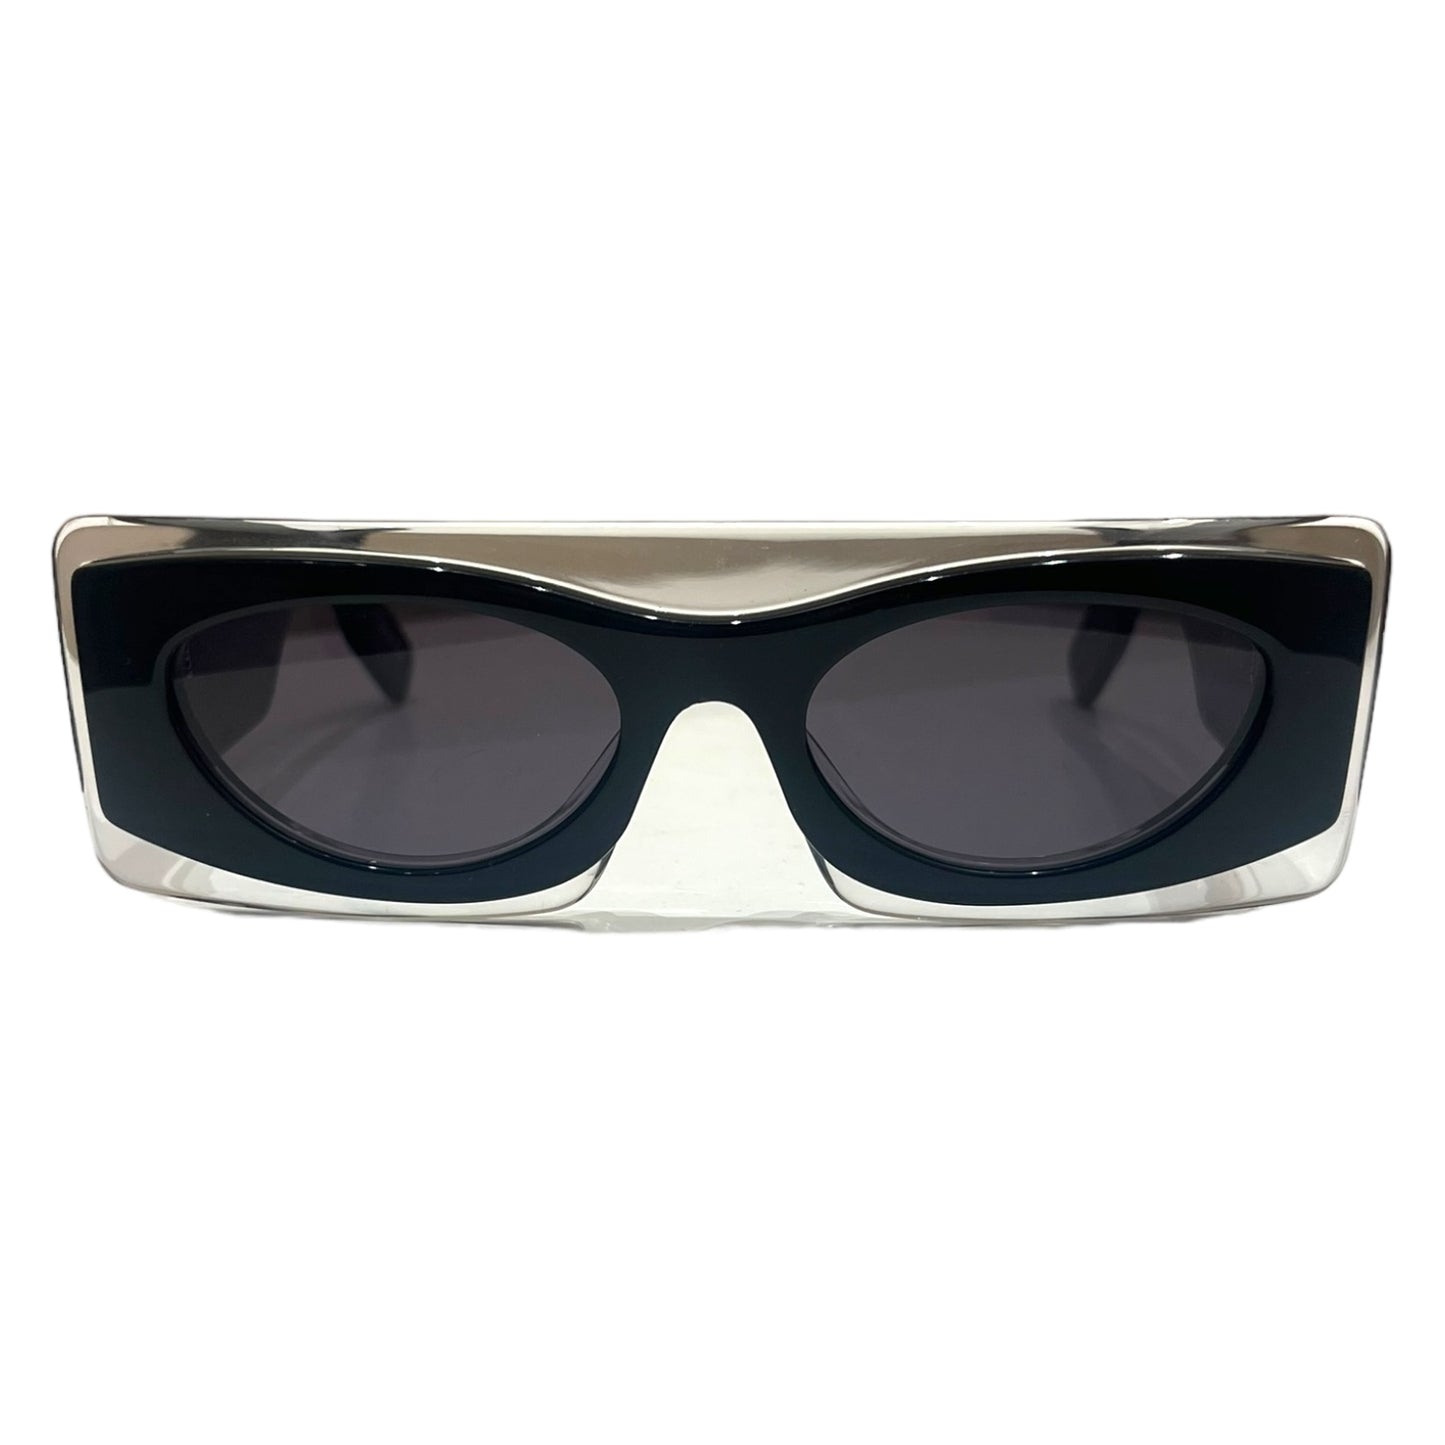 Kenzo Black Perspex Sunglasses